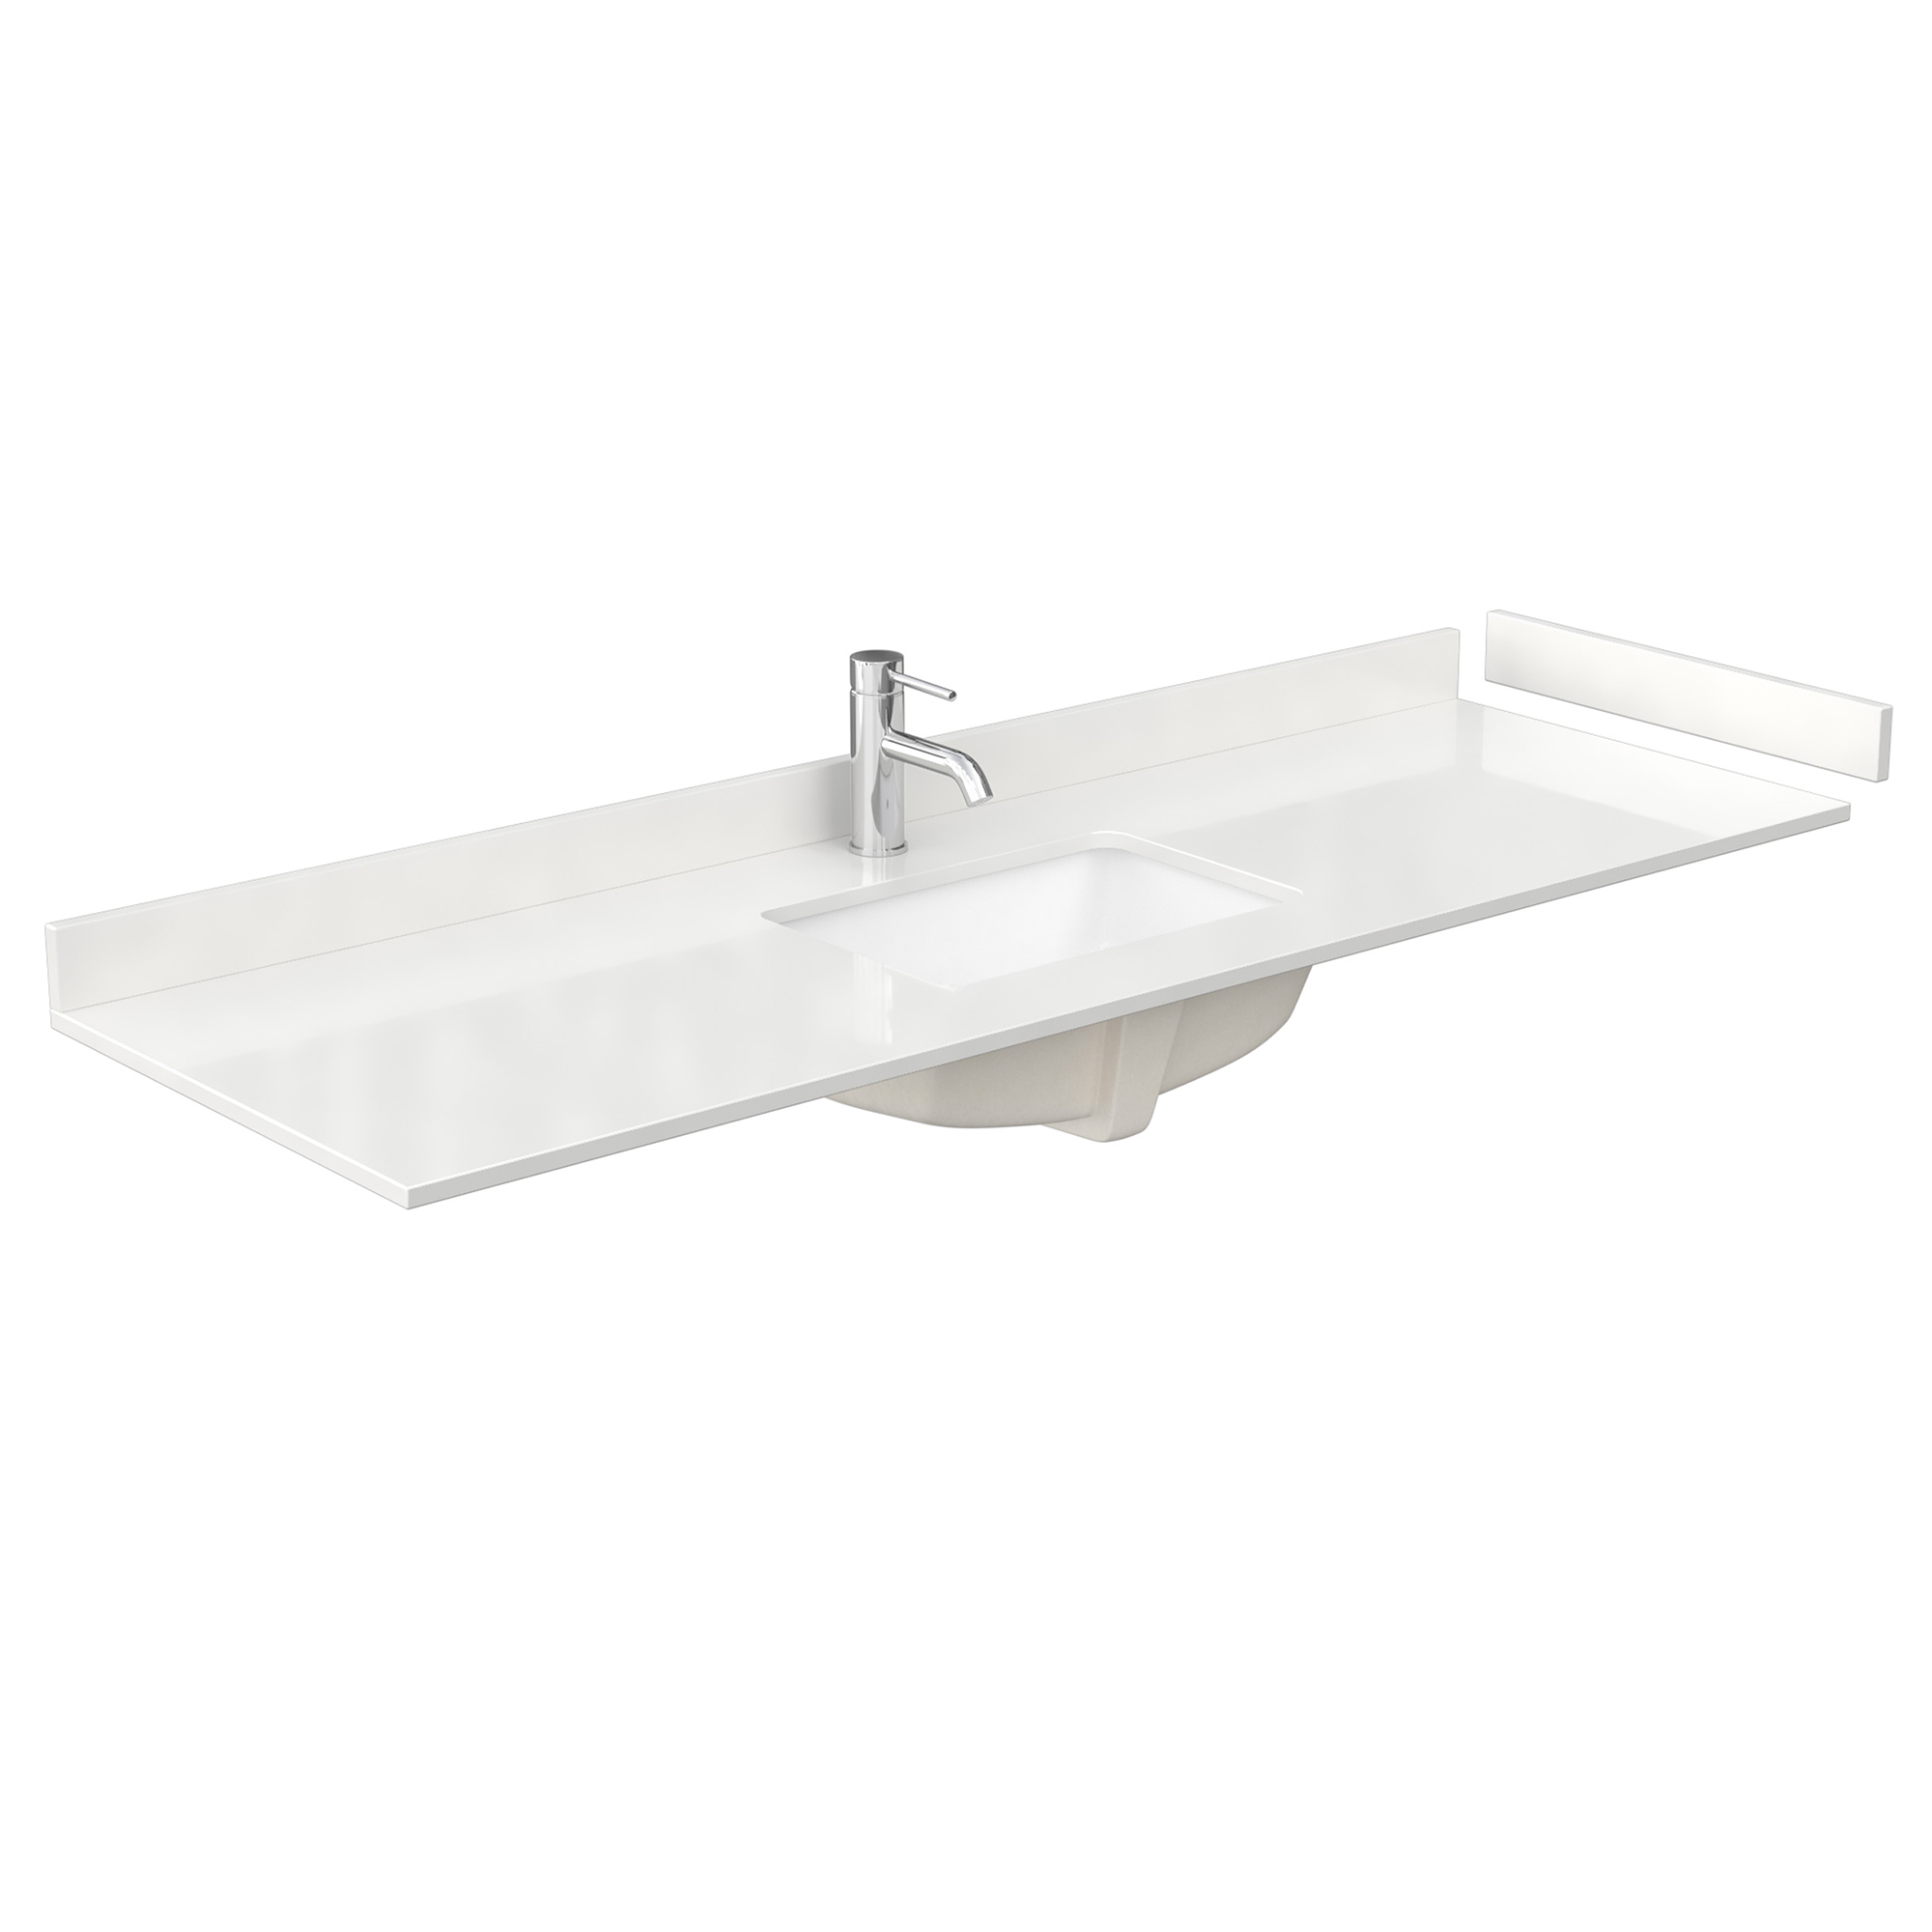 66" Single Countertop - White Quartz (1000) with Undermount Square Sink (1-Hole) - Includes Backsplash and Sidesplash WCFQC166STOPUNSWQ